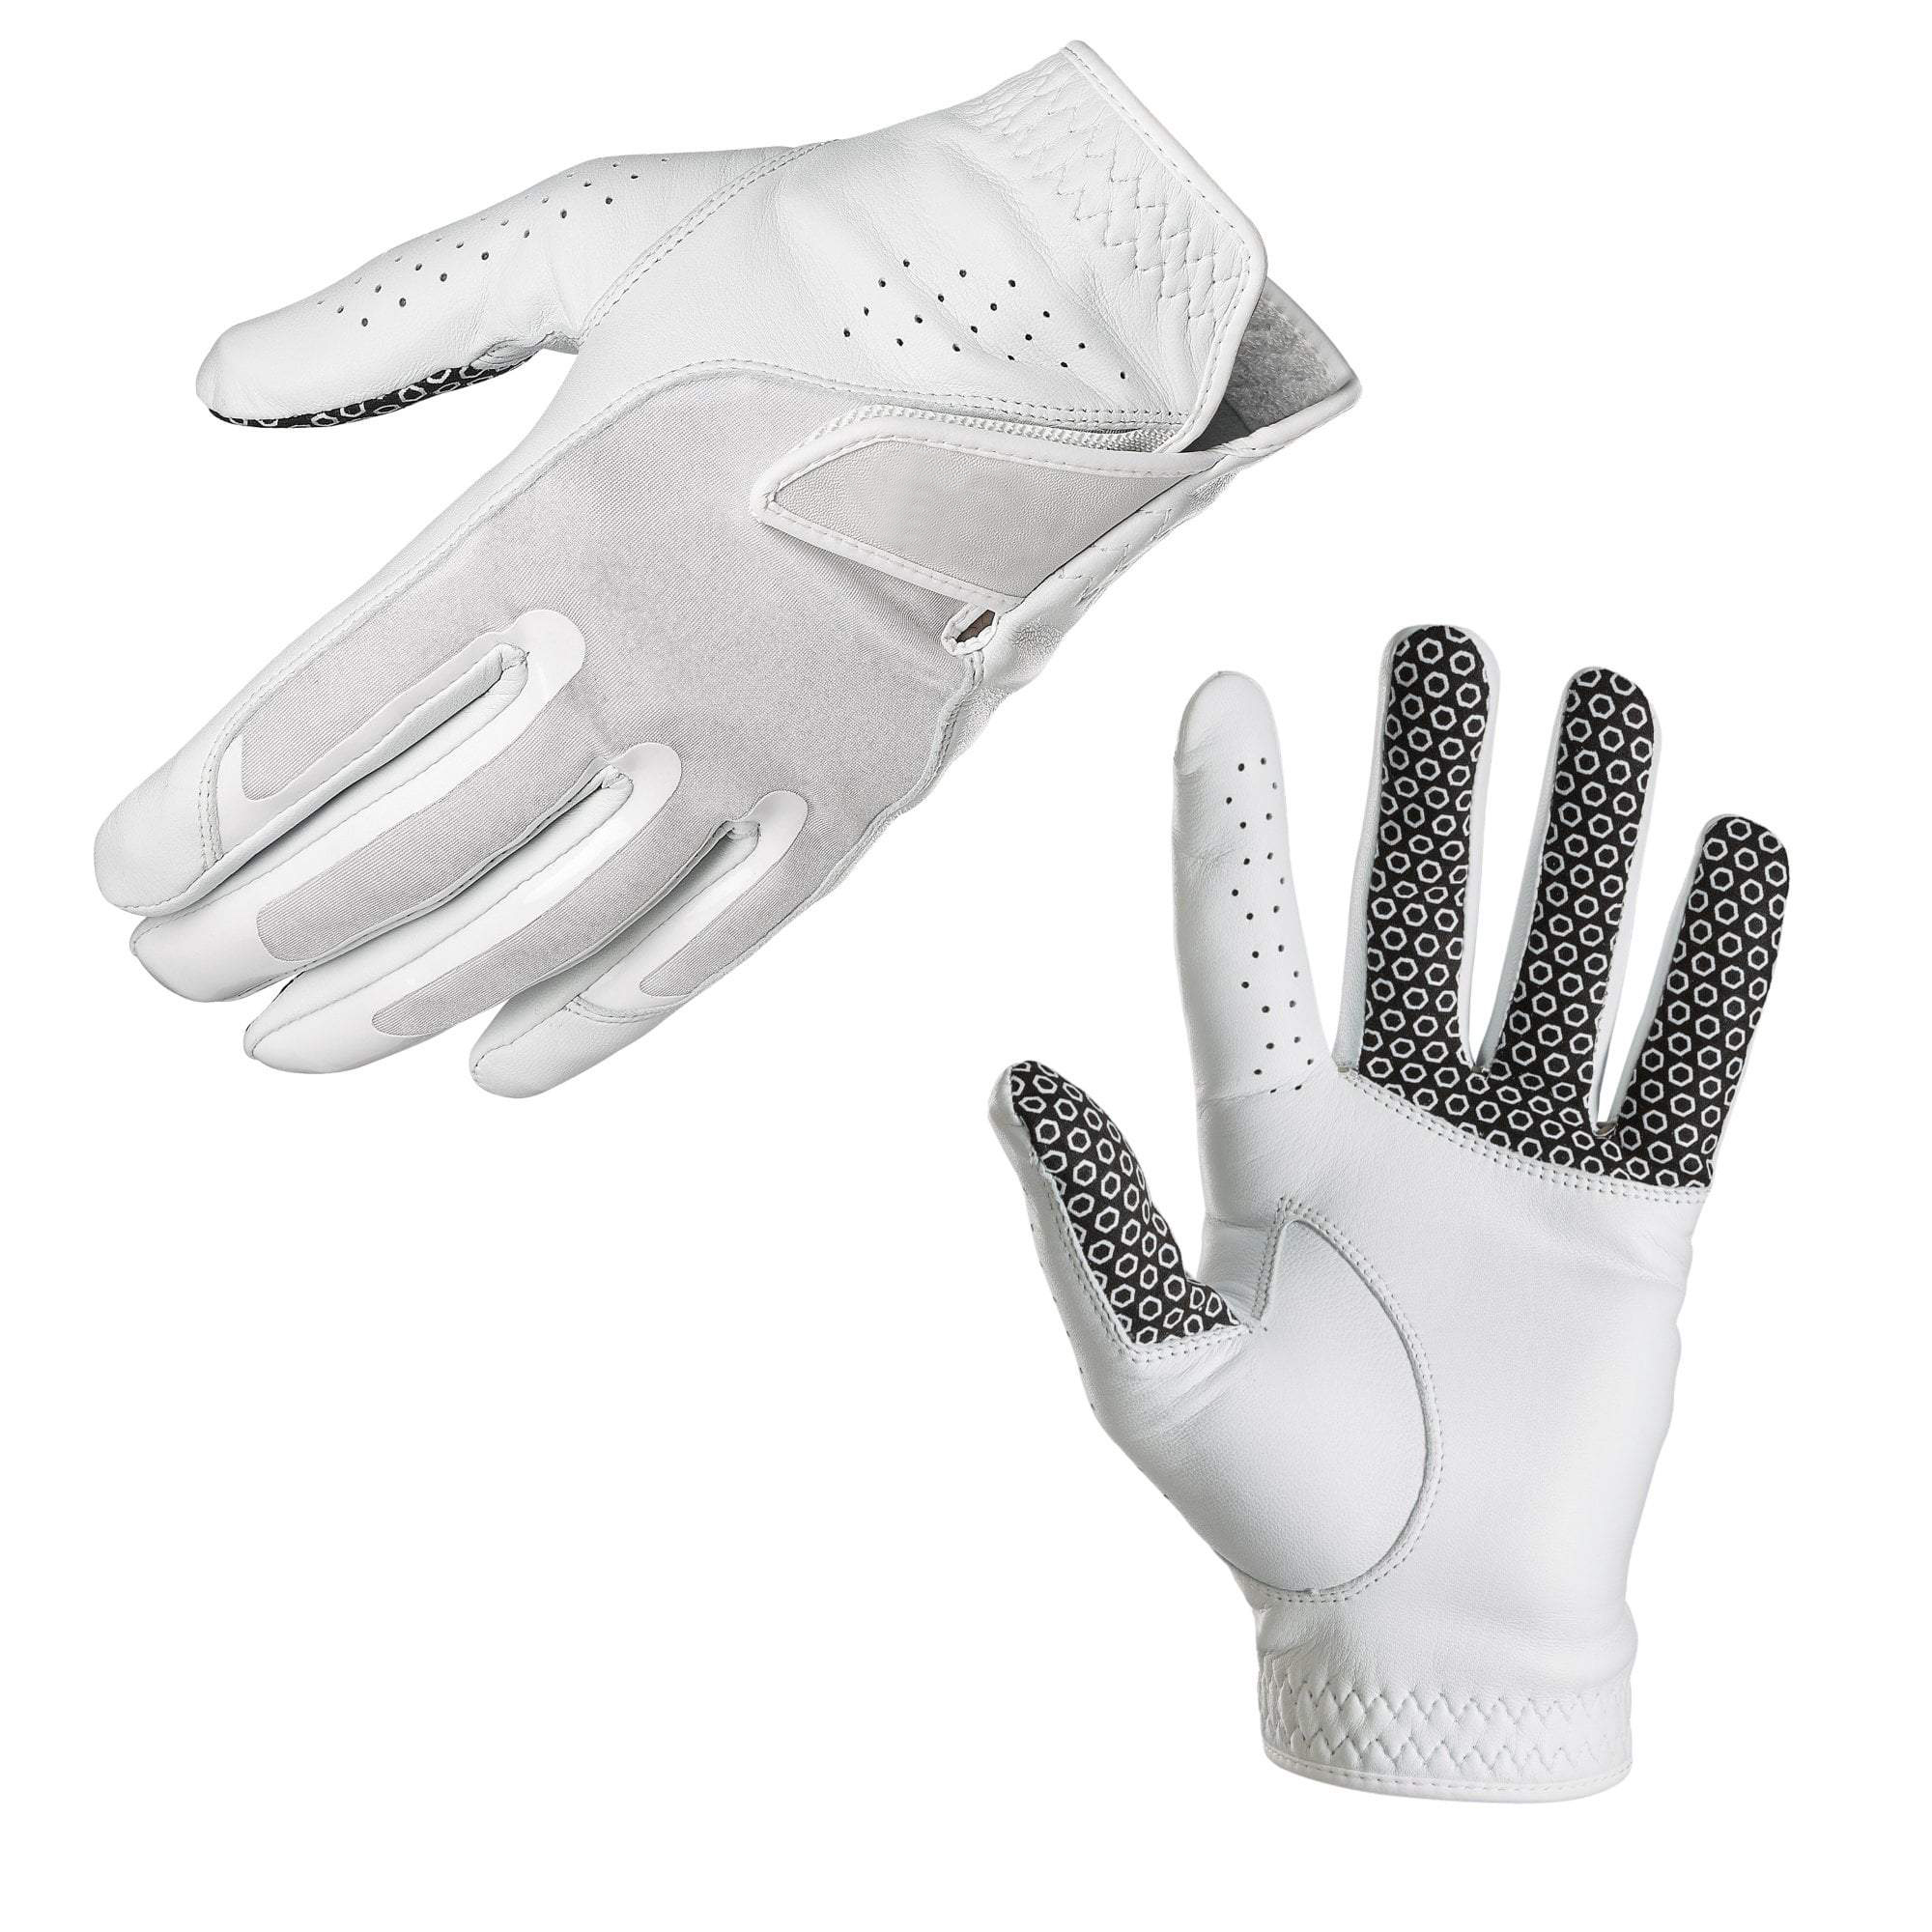 soft sheepskin leather custom professional left hand golf gloves